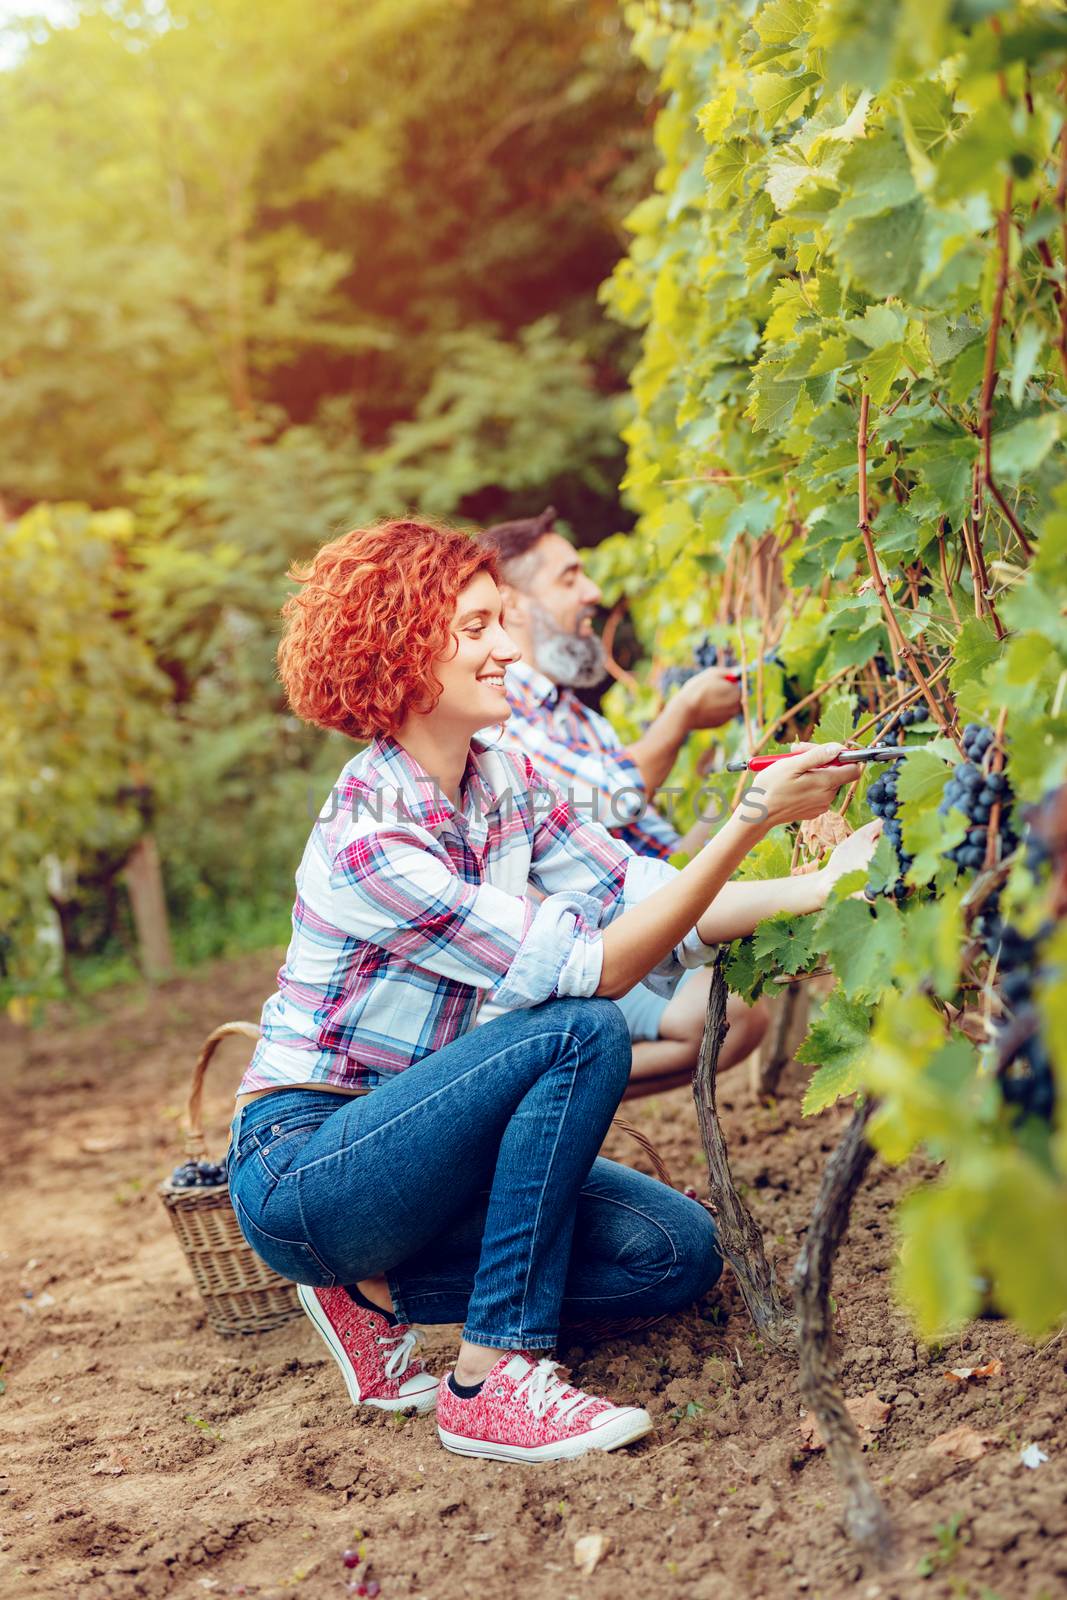 Beautiful smiling young woman cutting grapes at a vineyard. Selective focus.